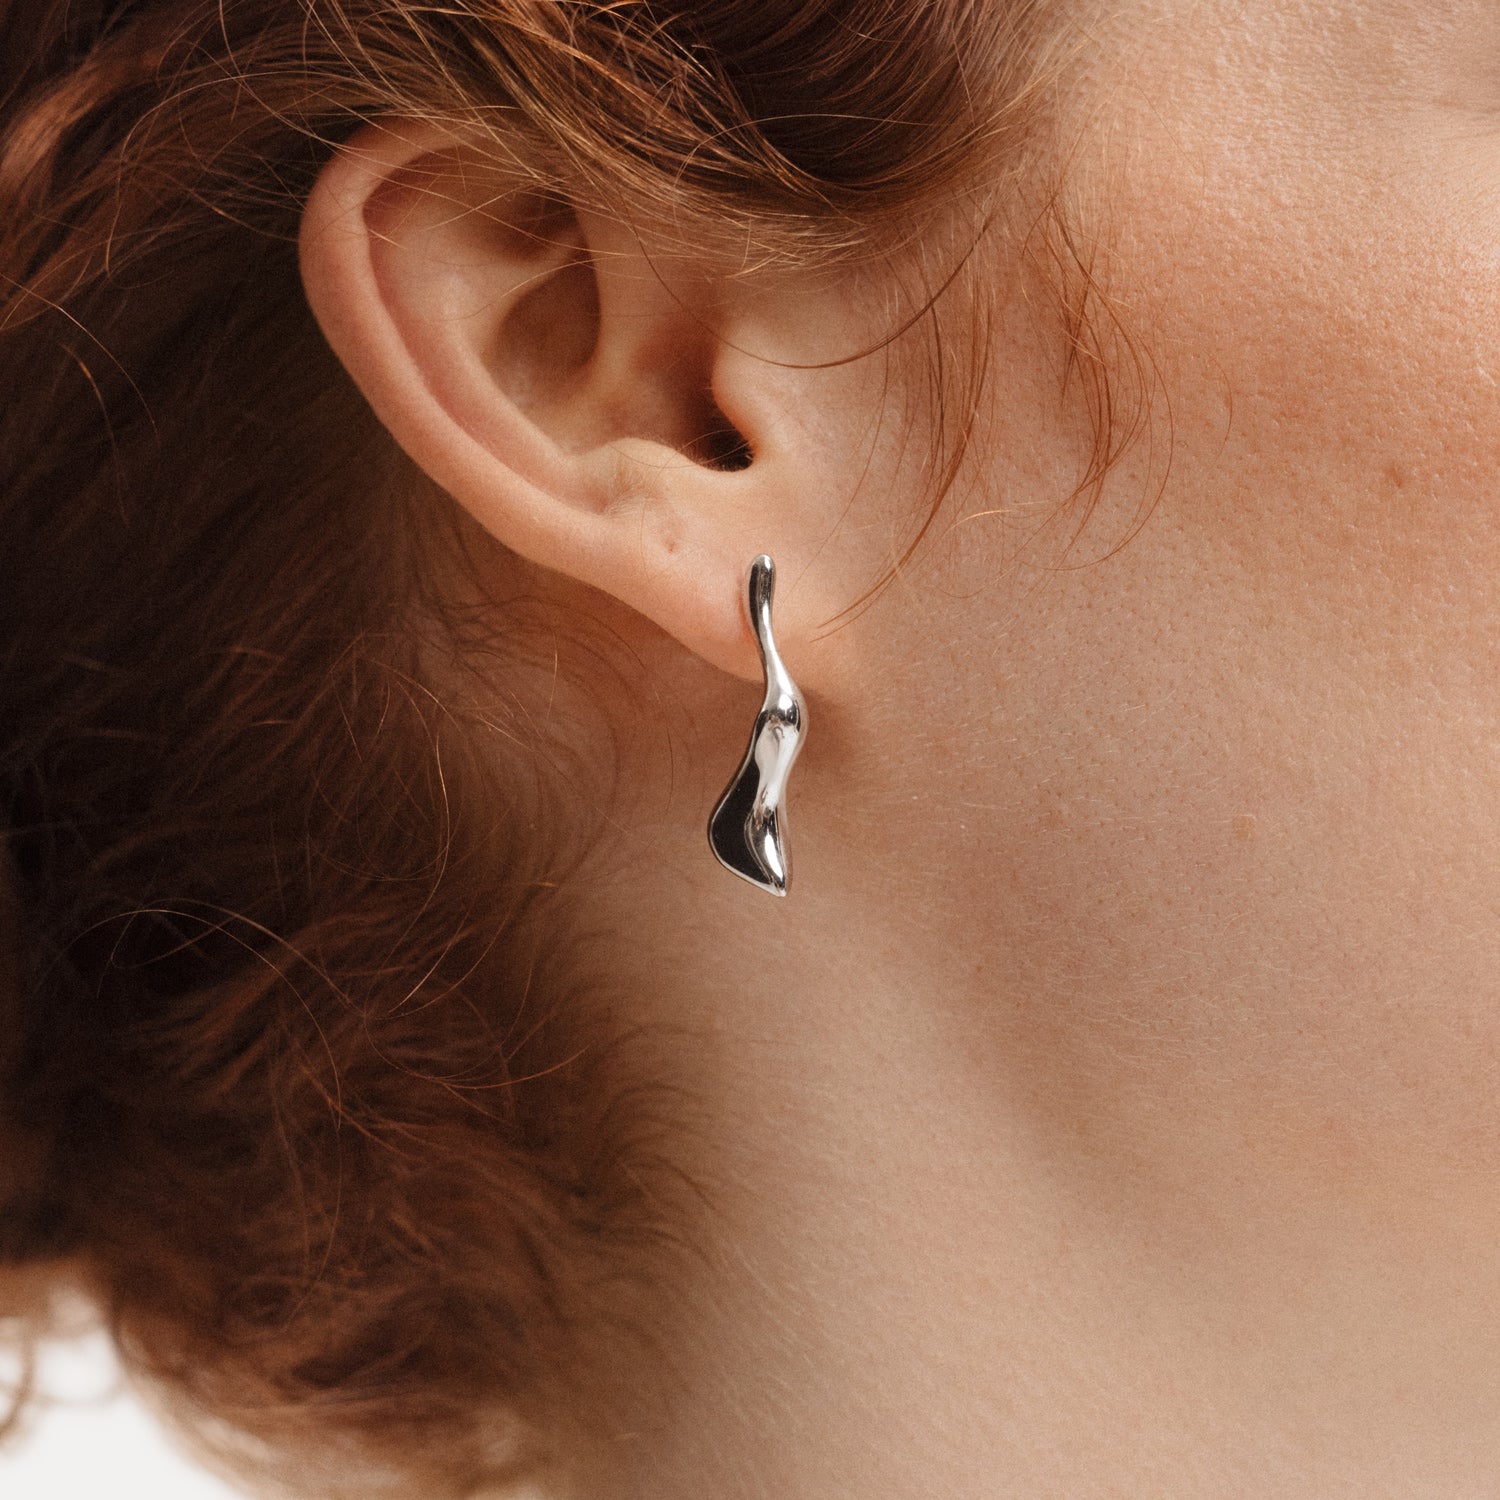 Poise Molten Drop Earrings, recycled Sterling Silver, shown on ear - VEYIA Berlin